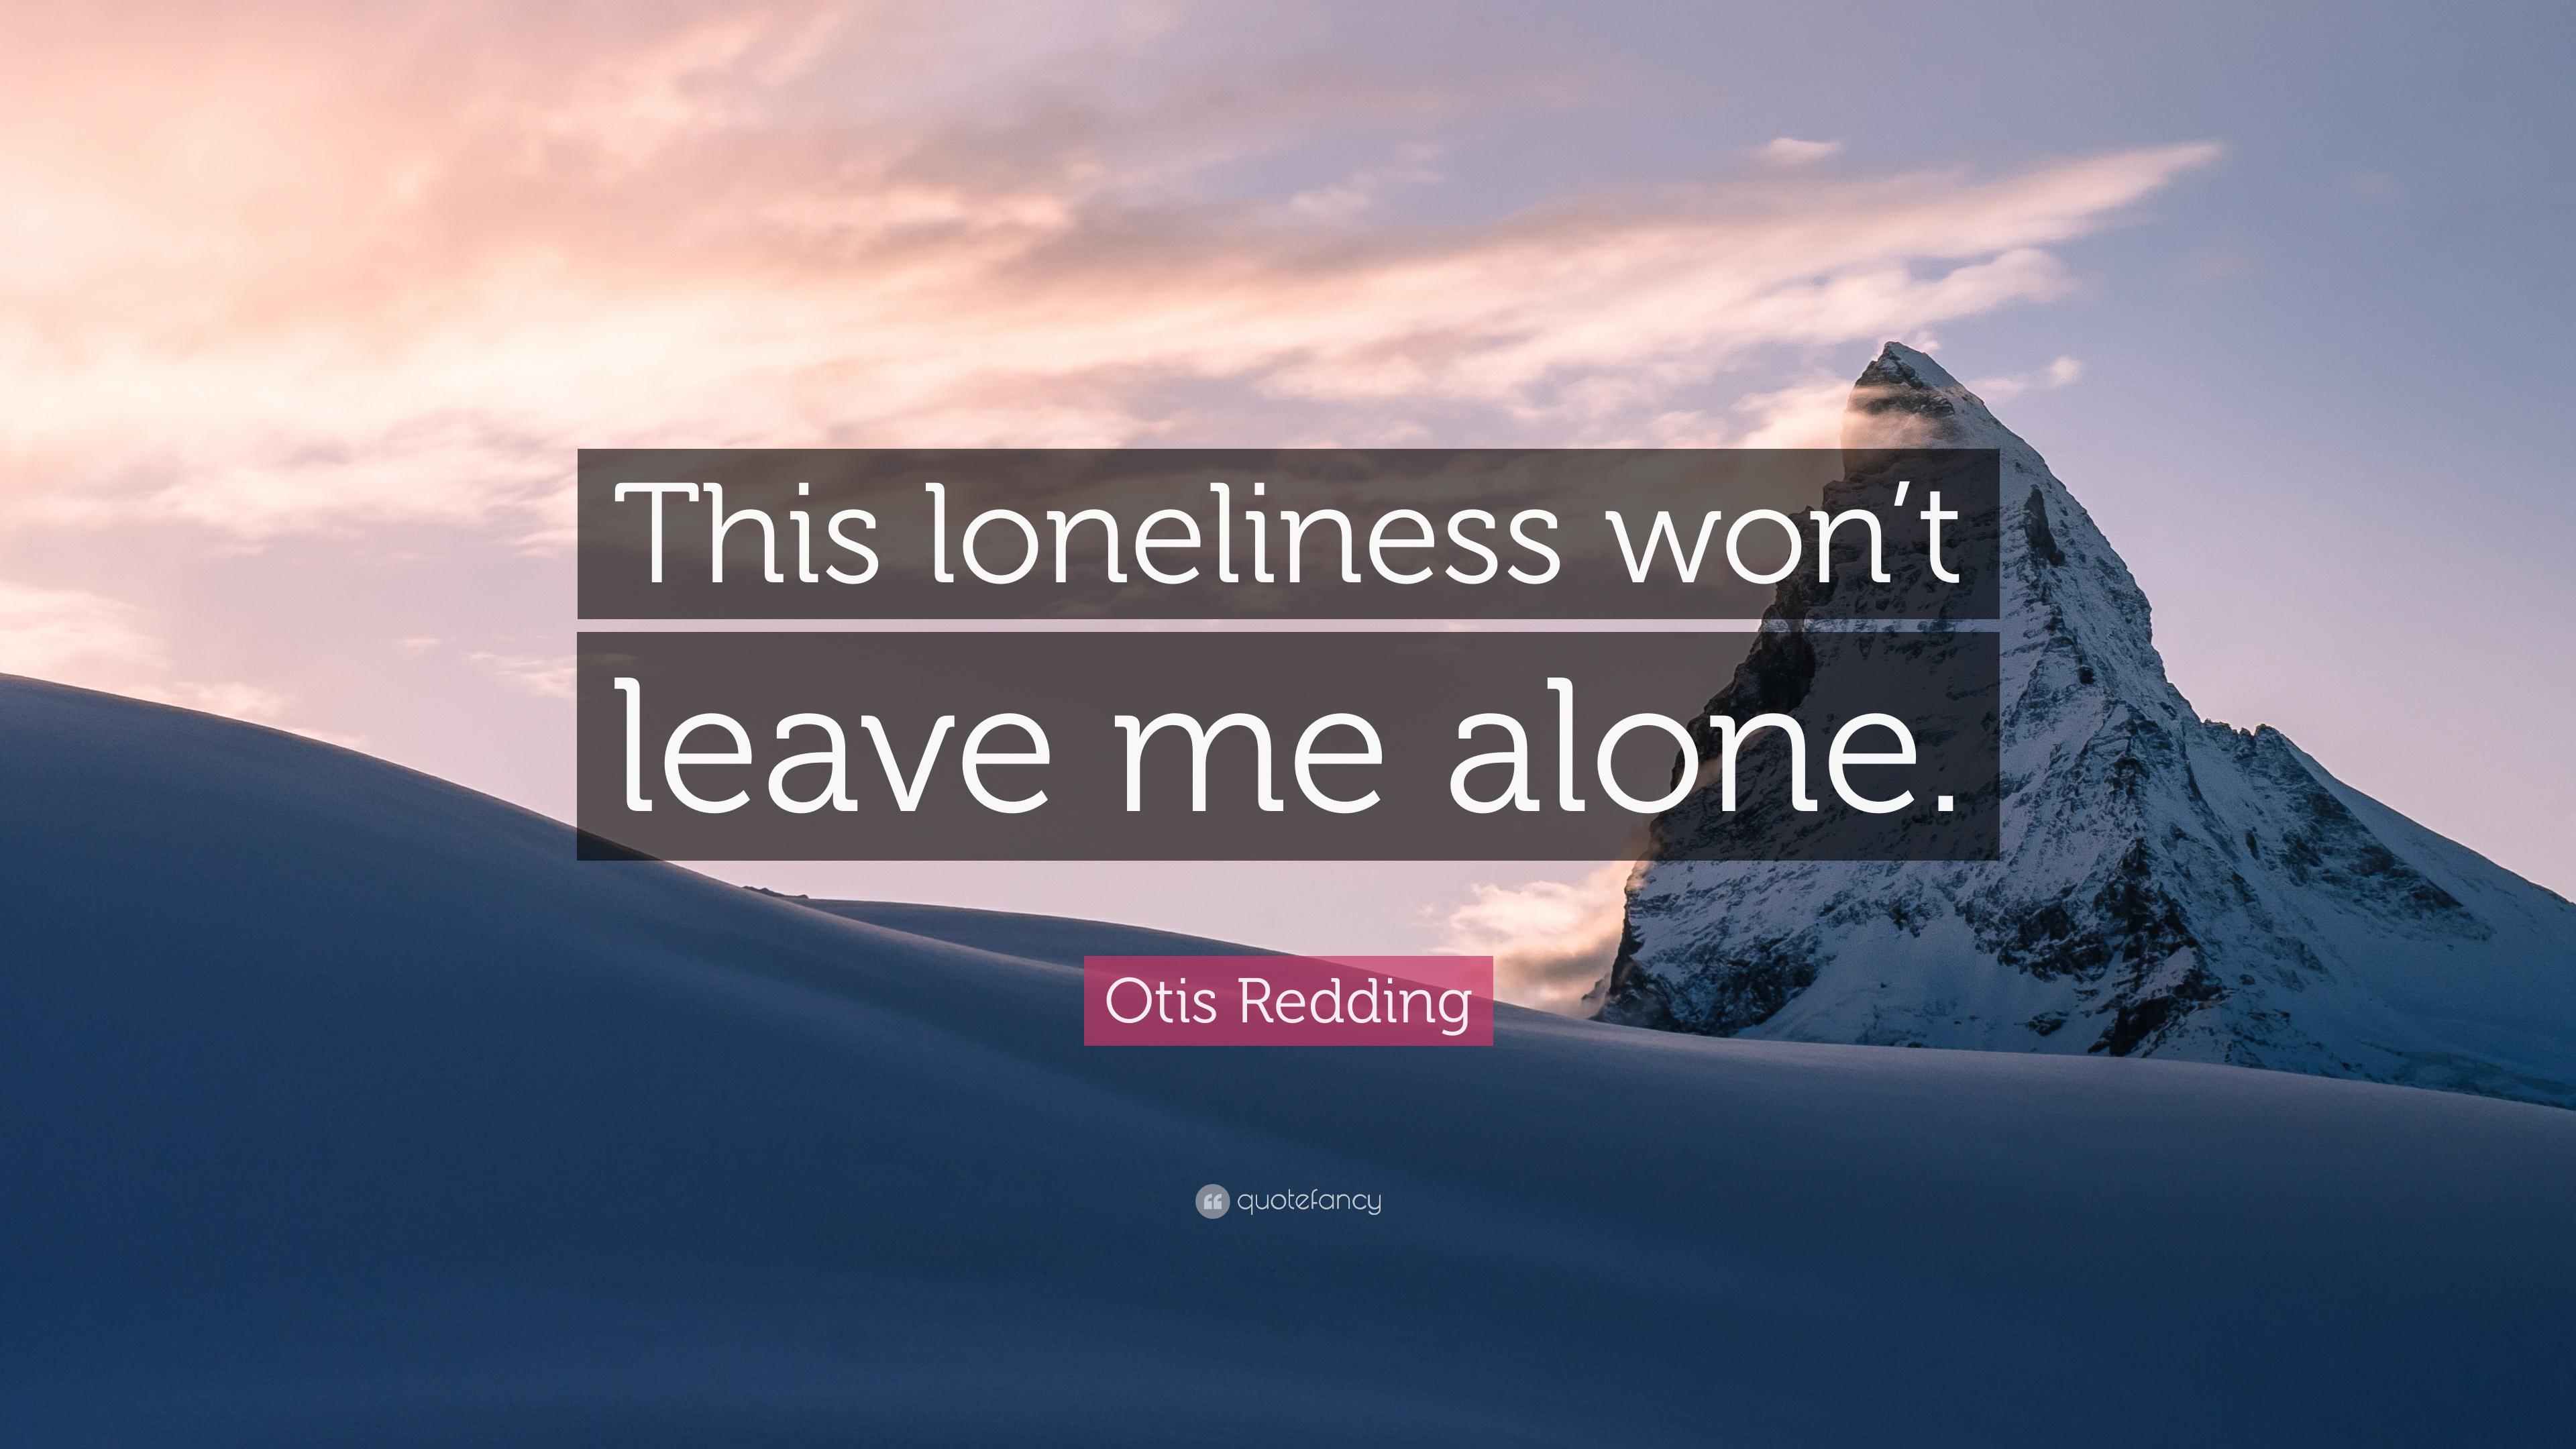 Otis Redding Quotes (6 wallpaper)